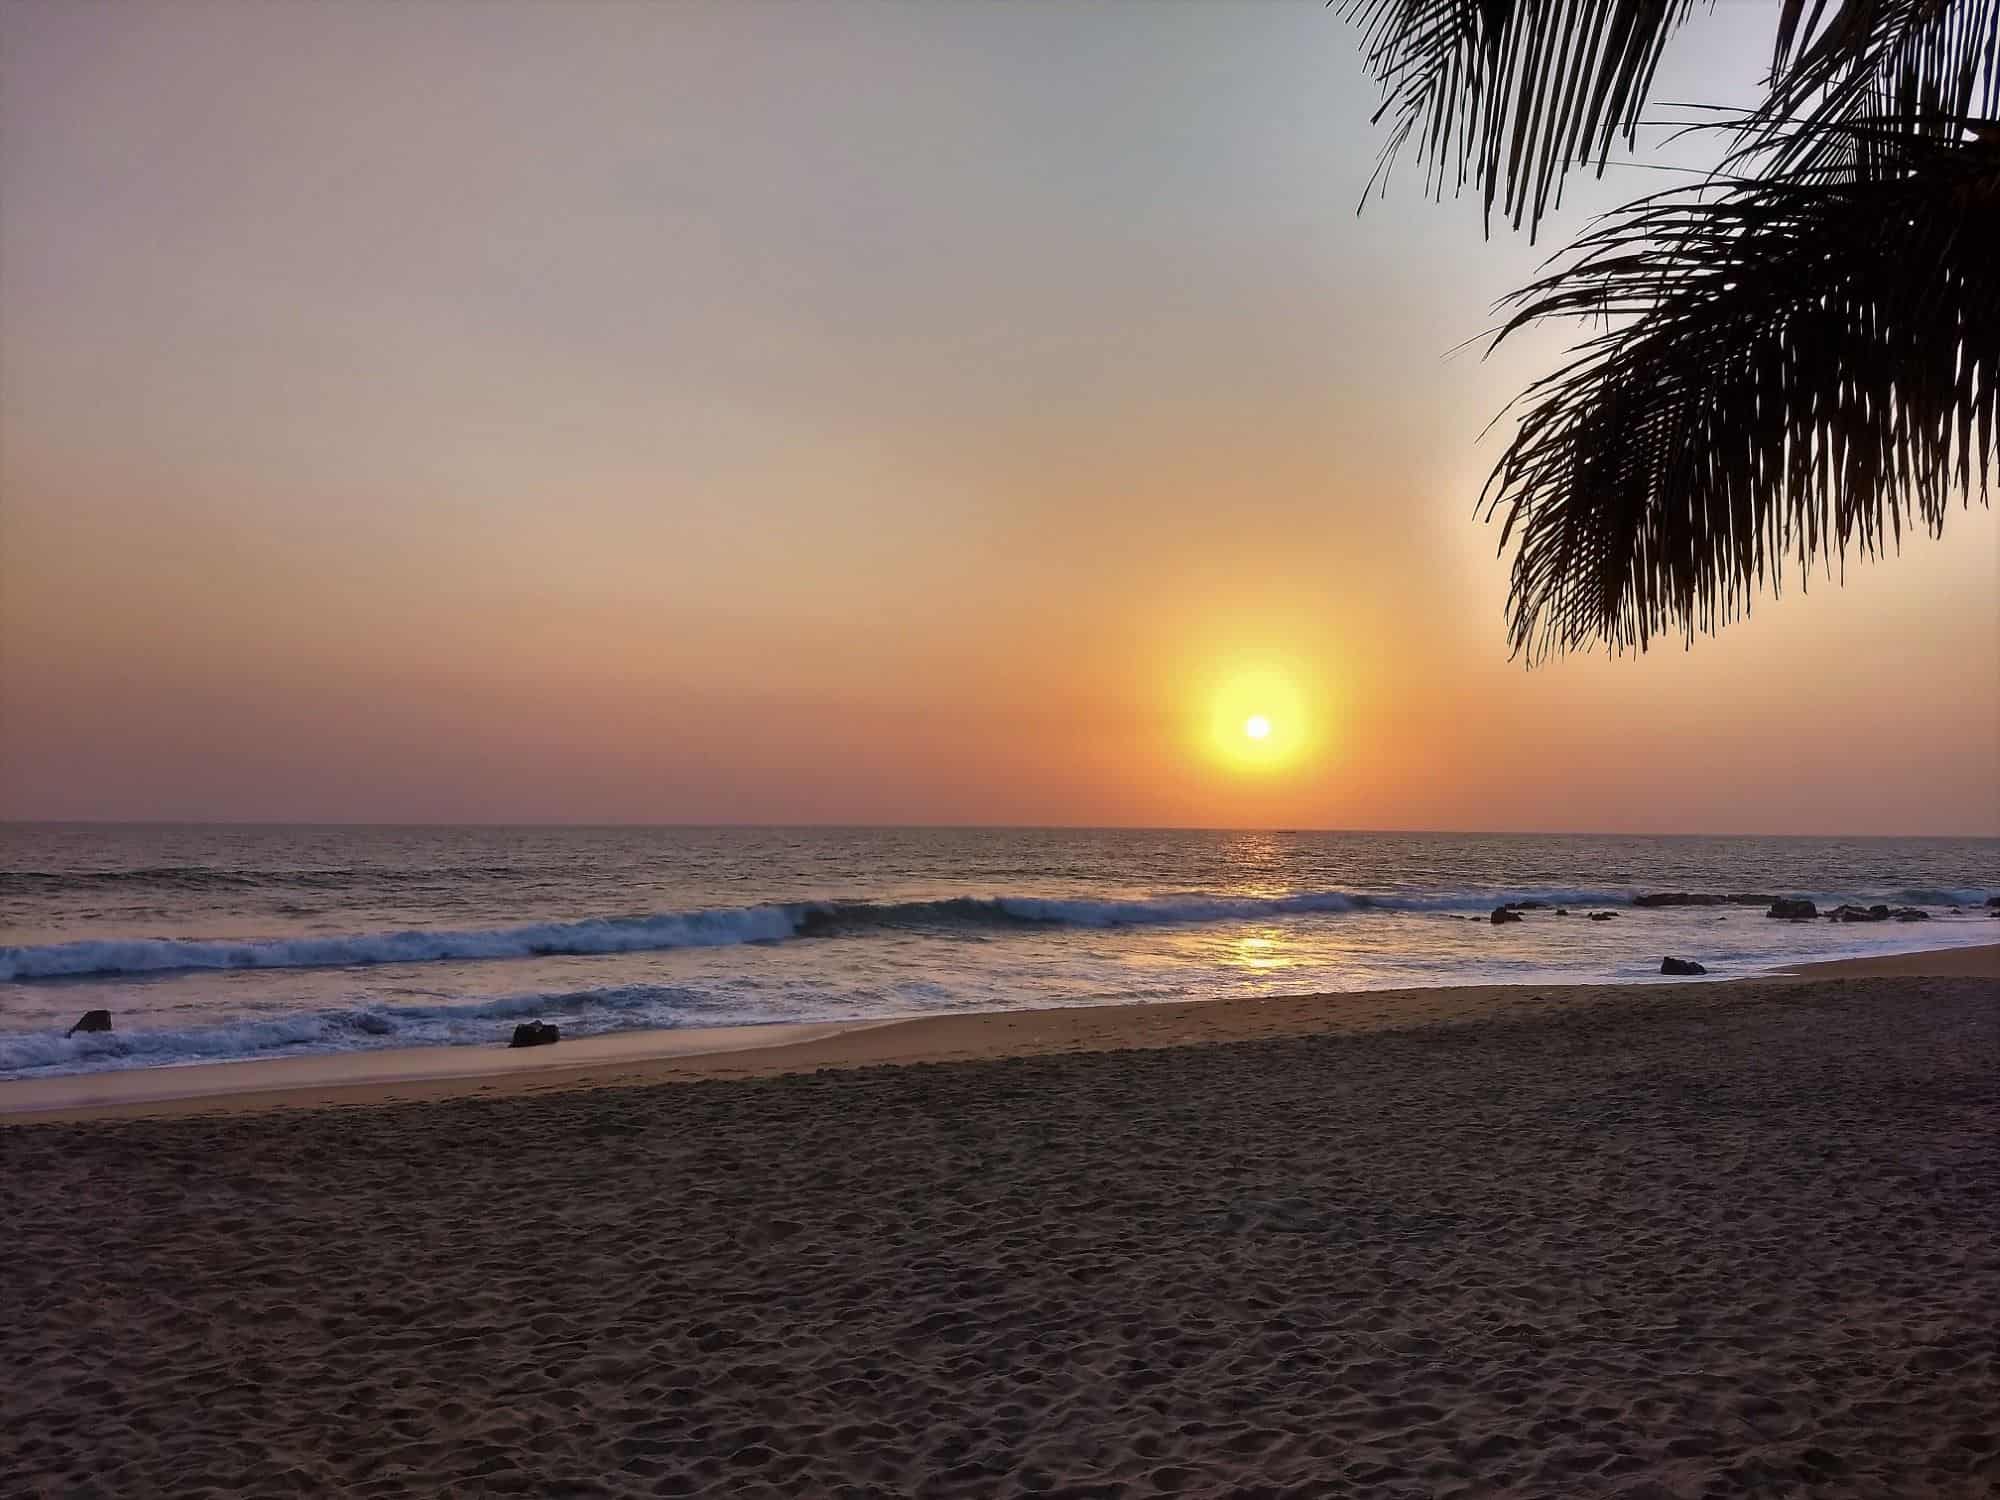 Liberia beach at sunset